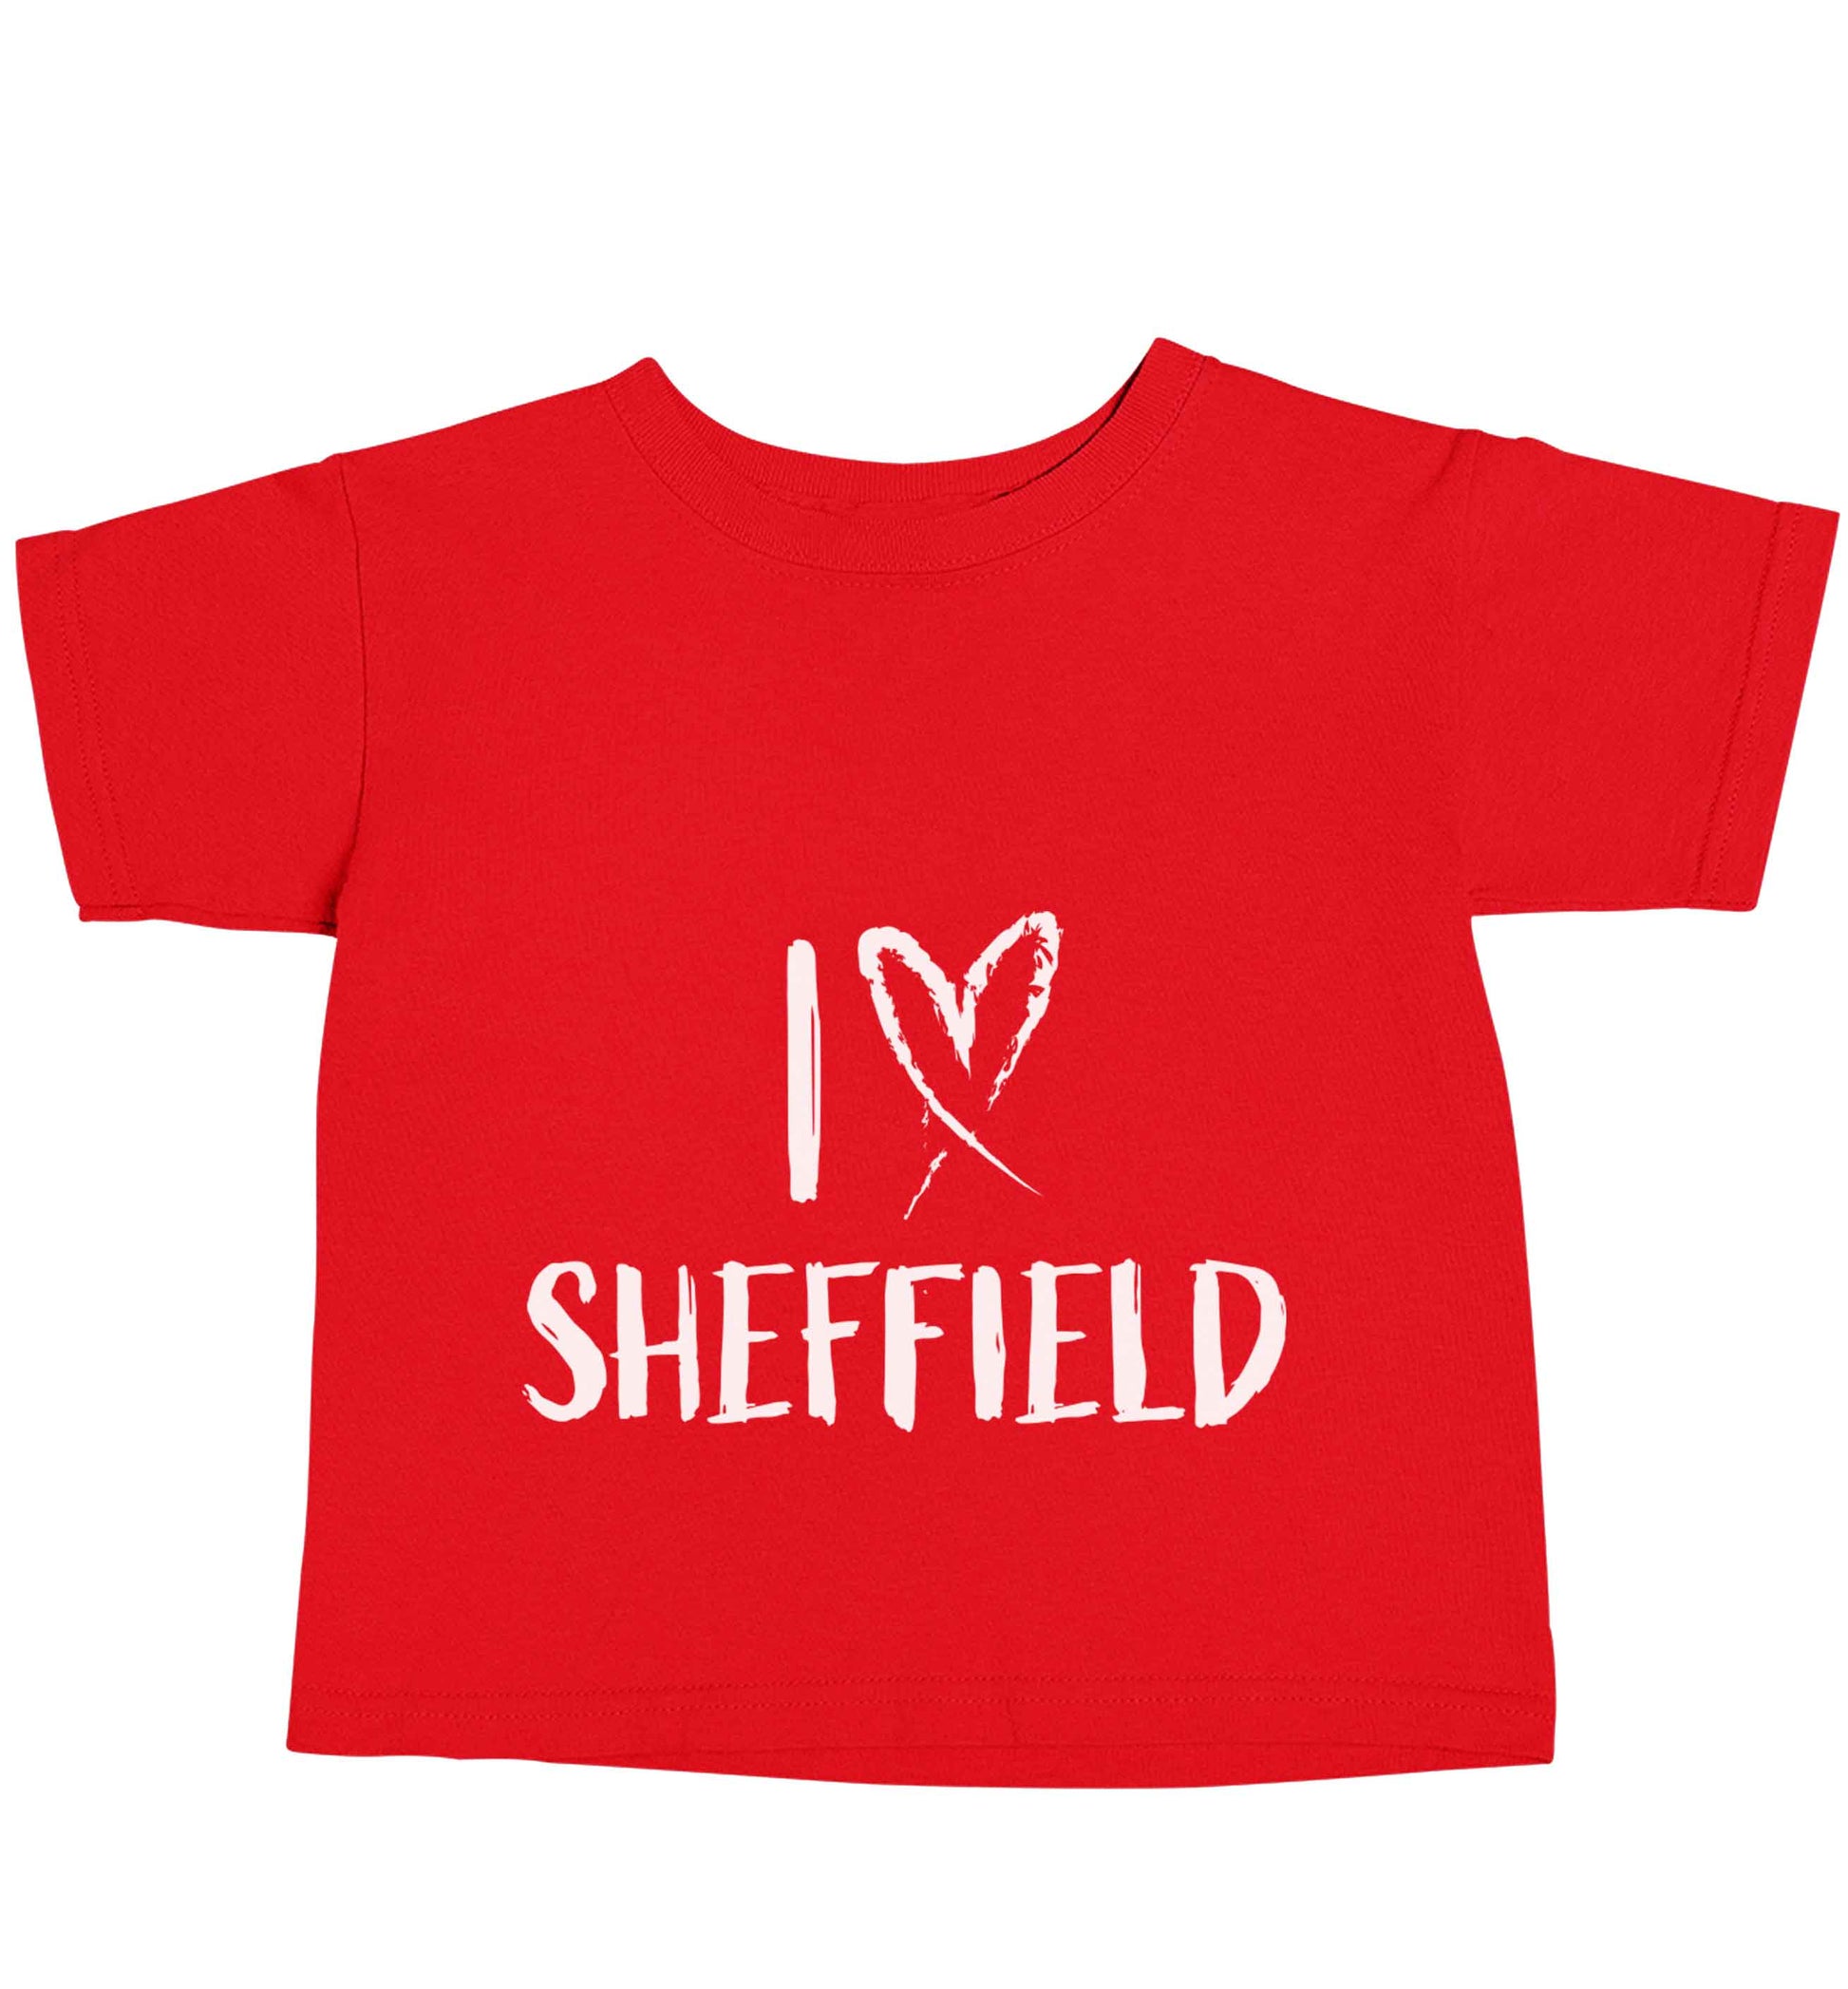 I love Sheffield red baby toddler Tshirt 2 Years